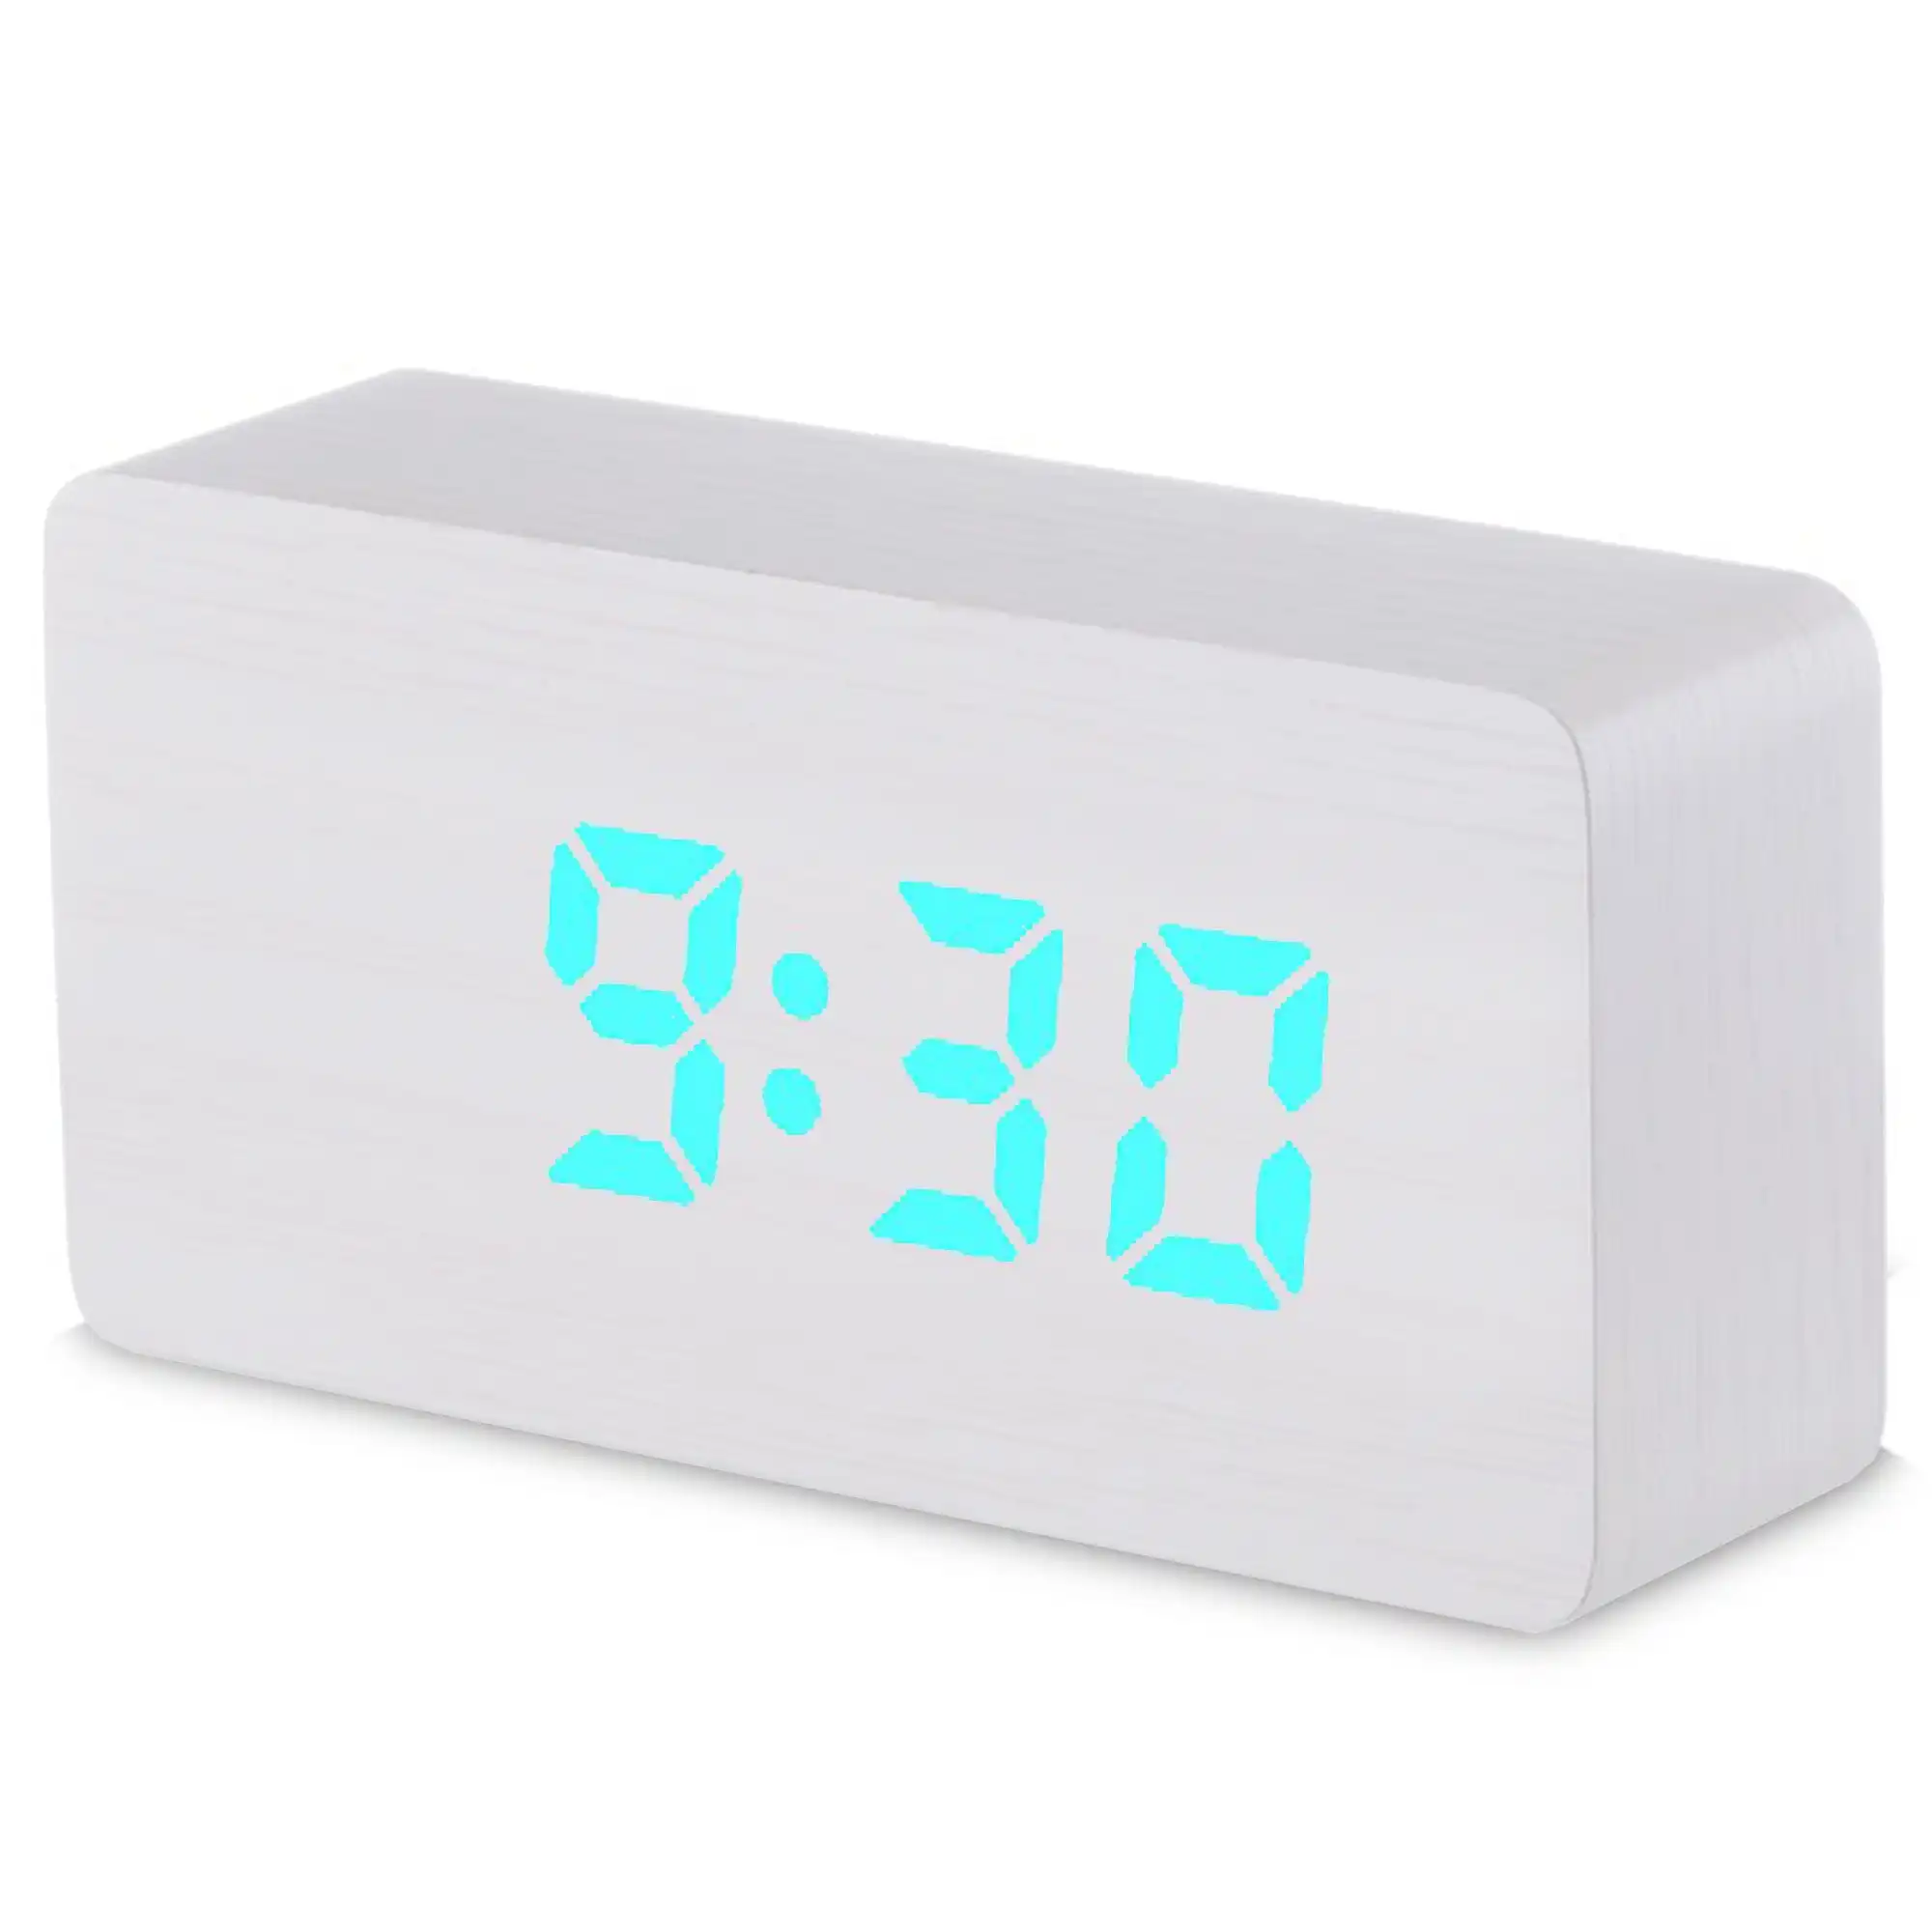 Todo LED Digital Alarm Clock 3 Alarm 115 Colour Display USB Power Woodgrain - White